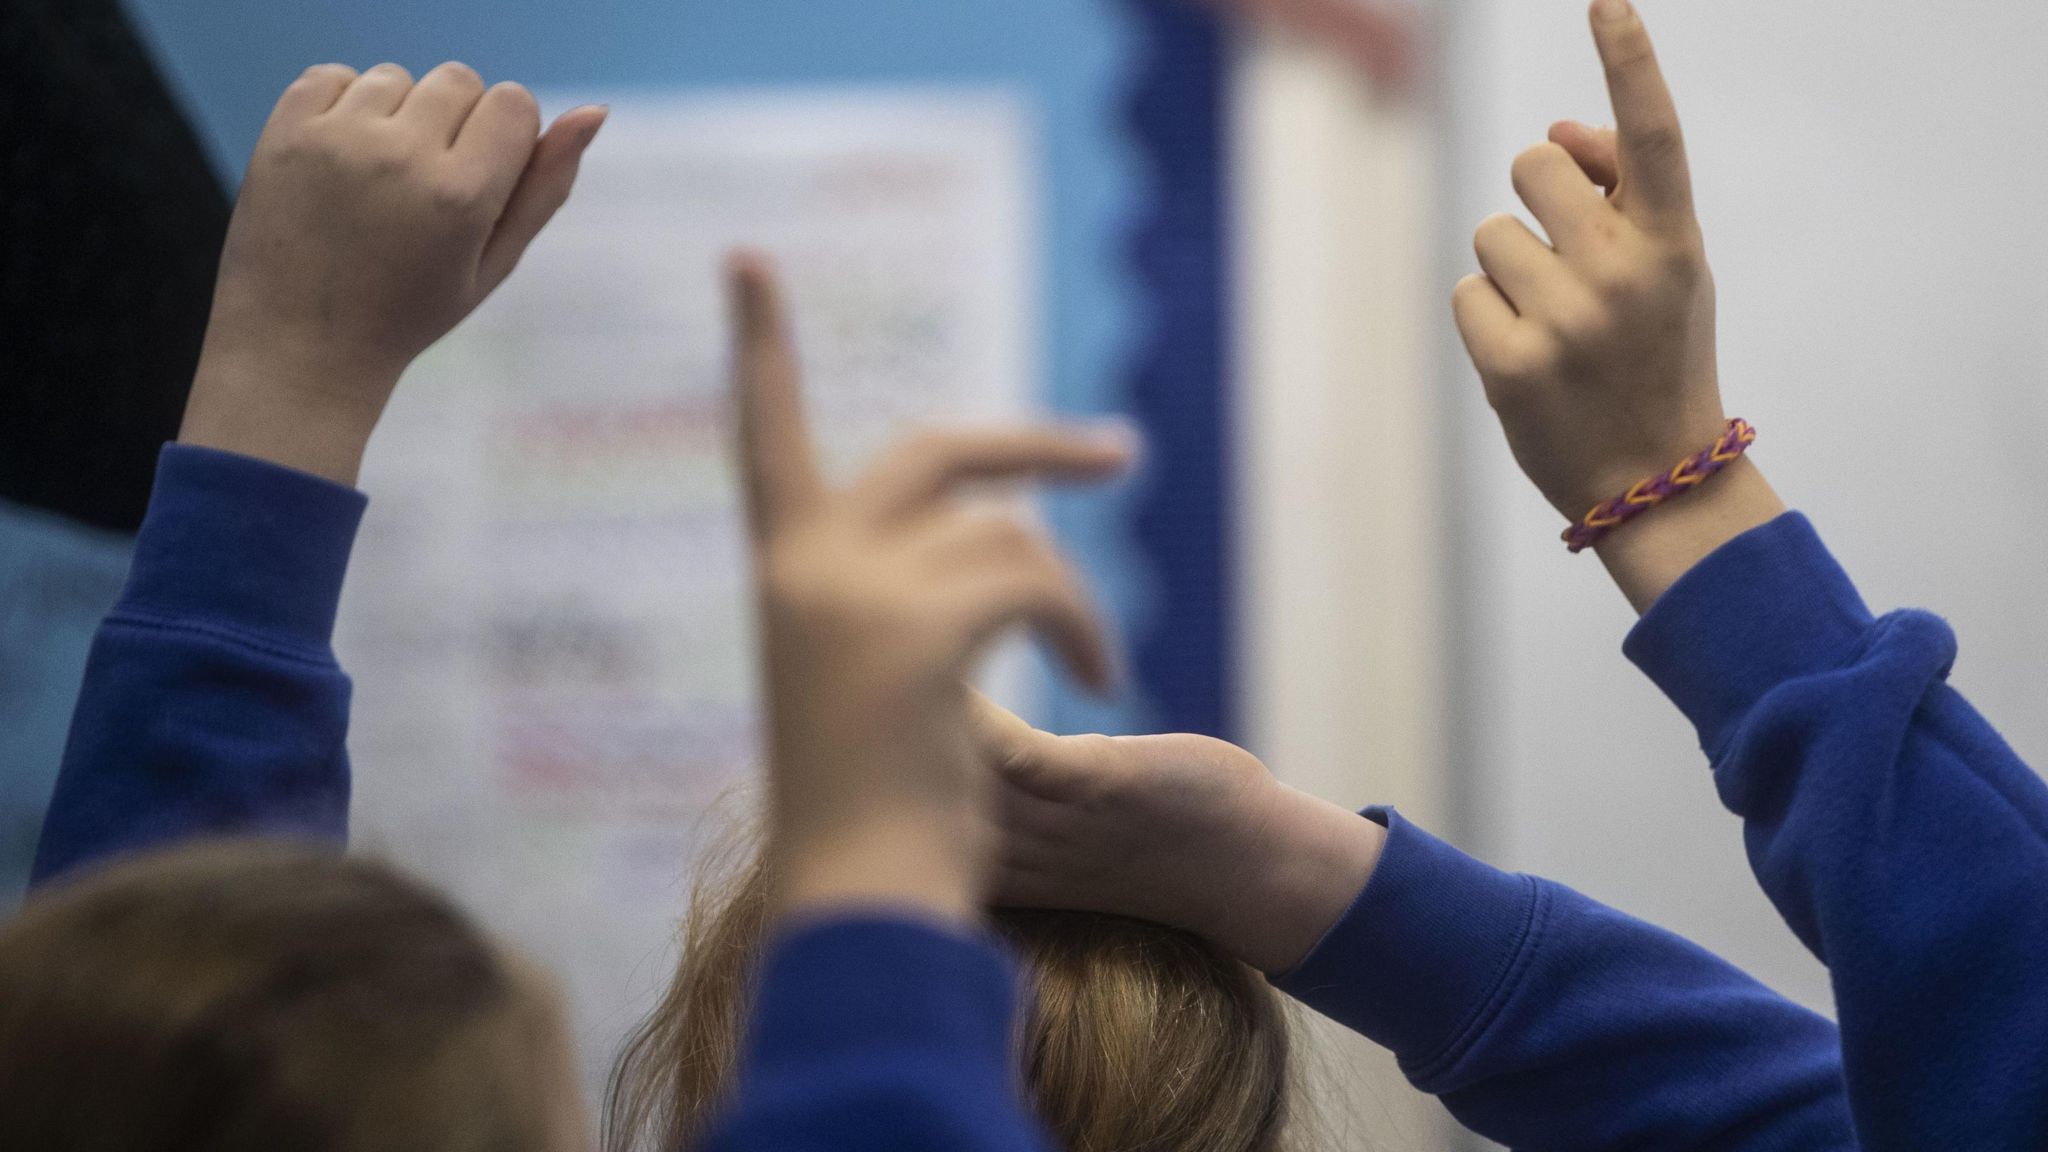 Anonymous schoolchildren wearing blue putting their hands up in a class